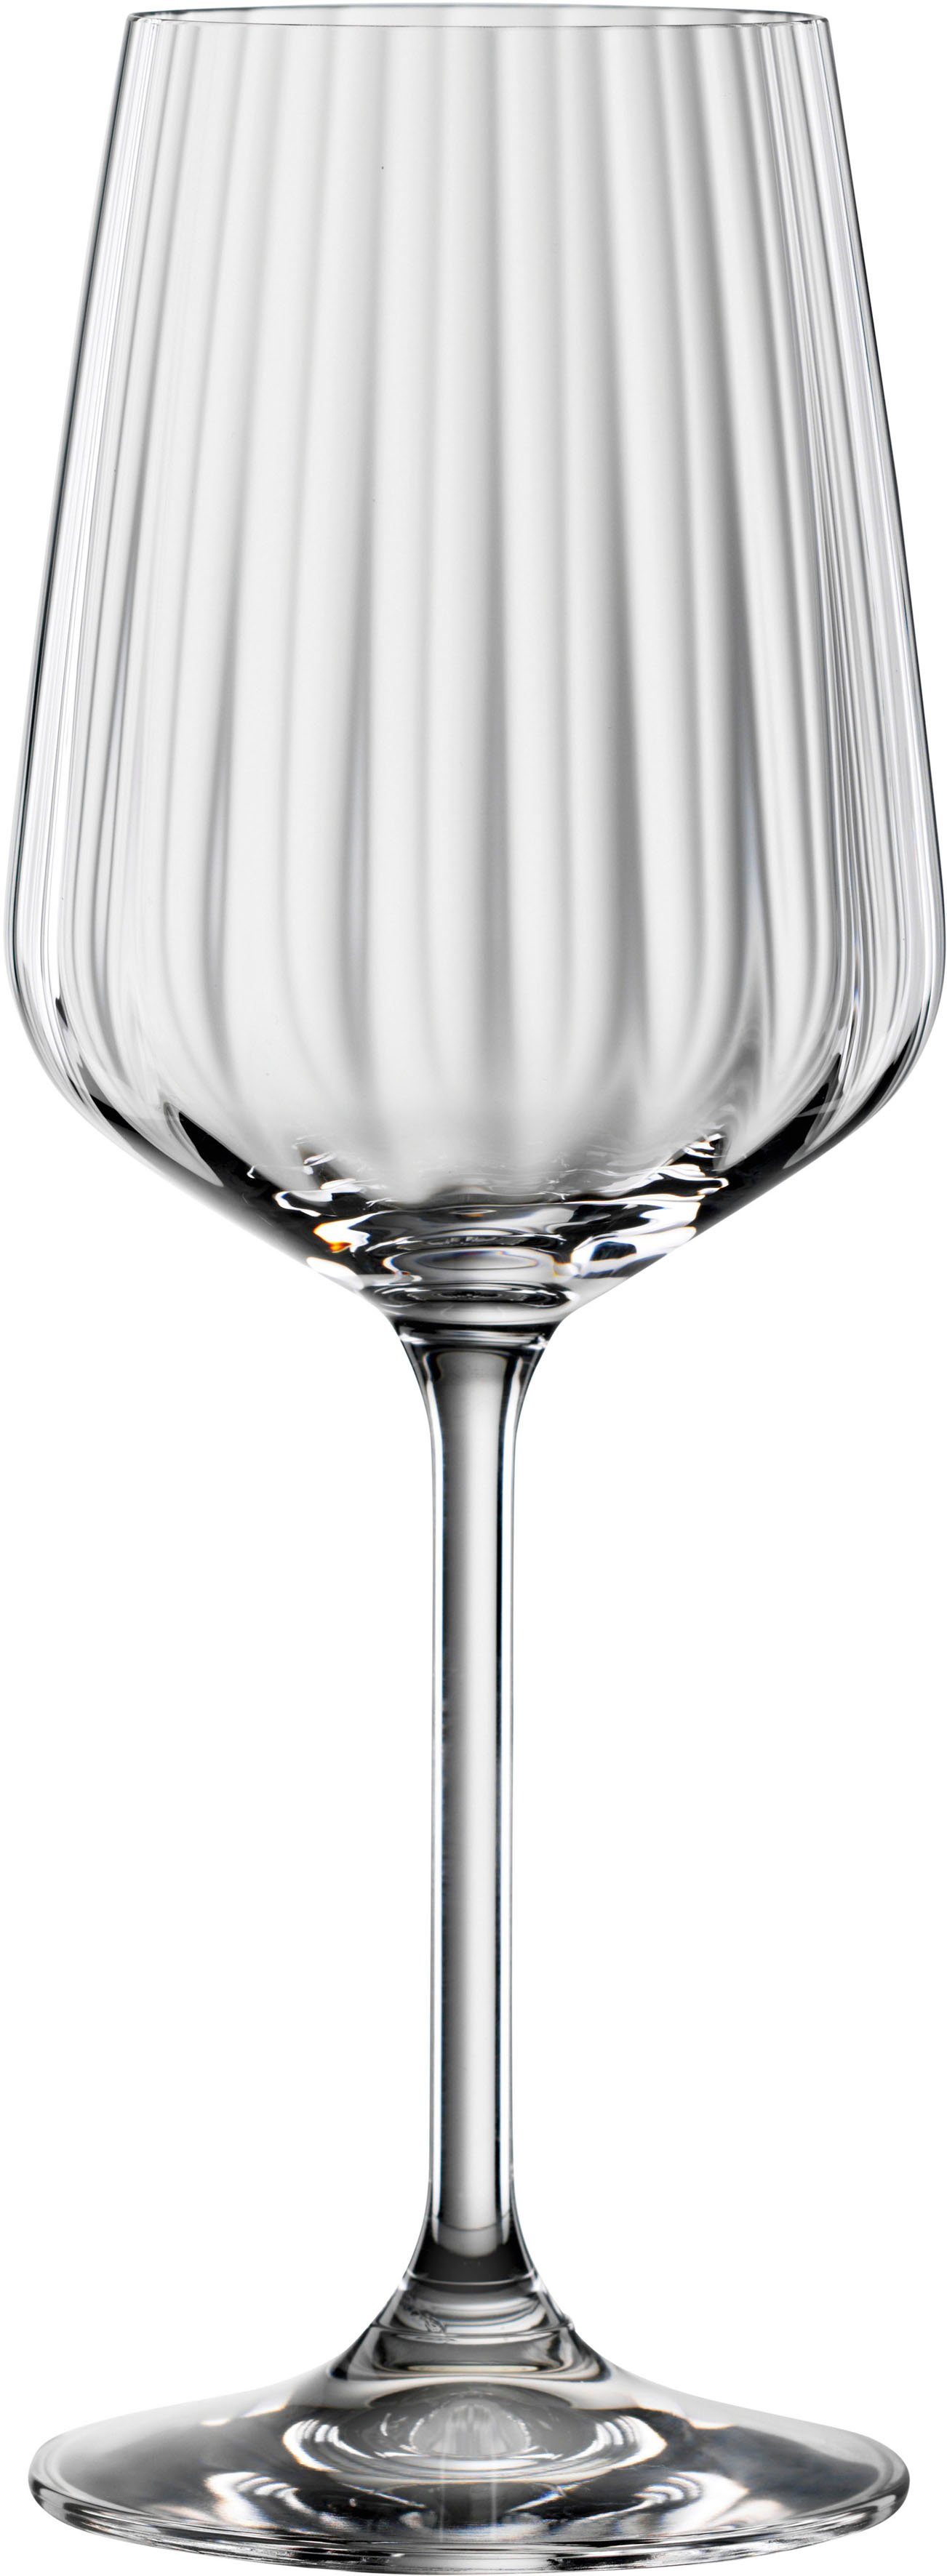 SPIEGELAU Weißweinglas LifeStyle, Kristallglas, 440 ml, 4-teilig